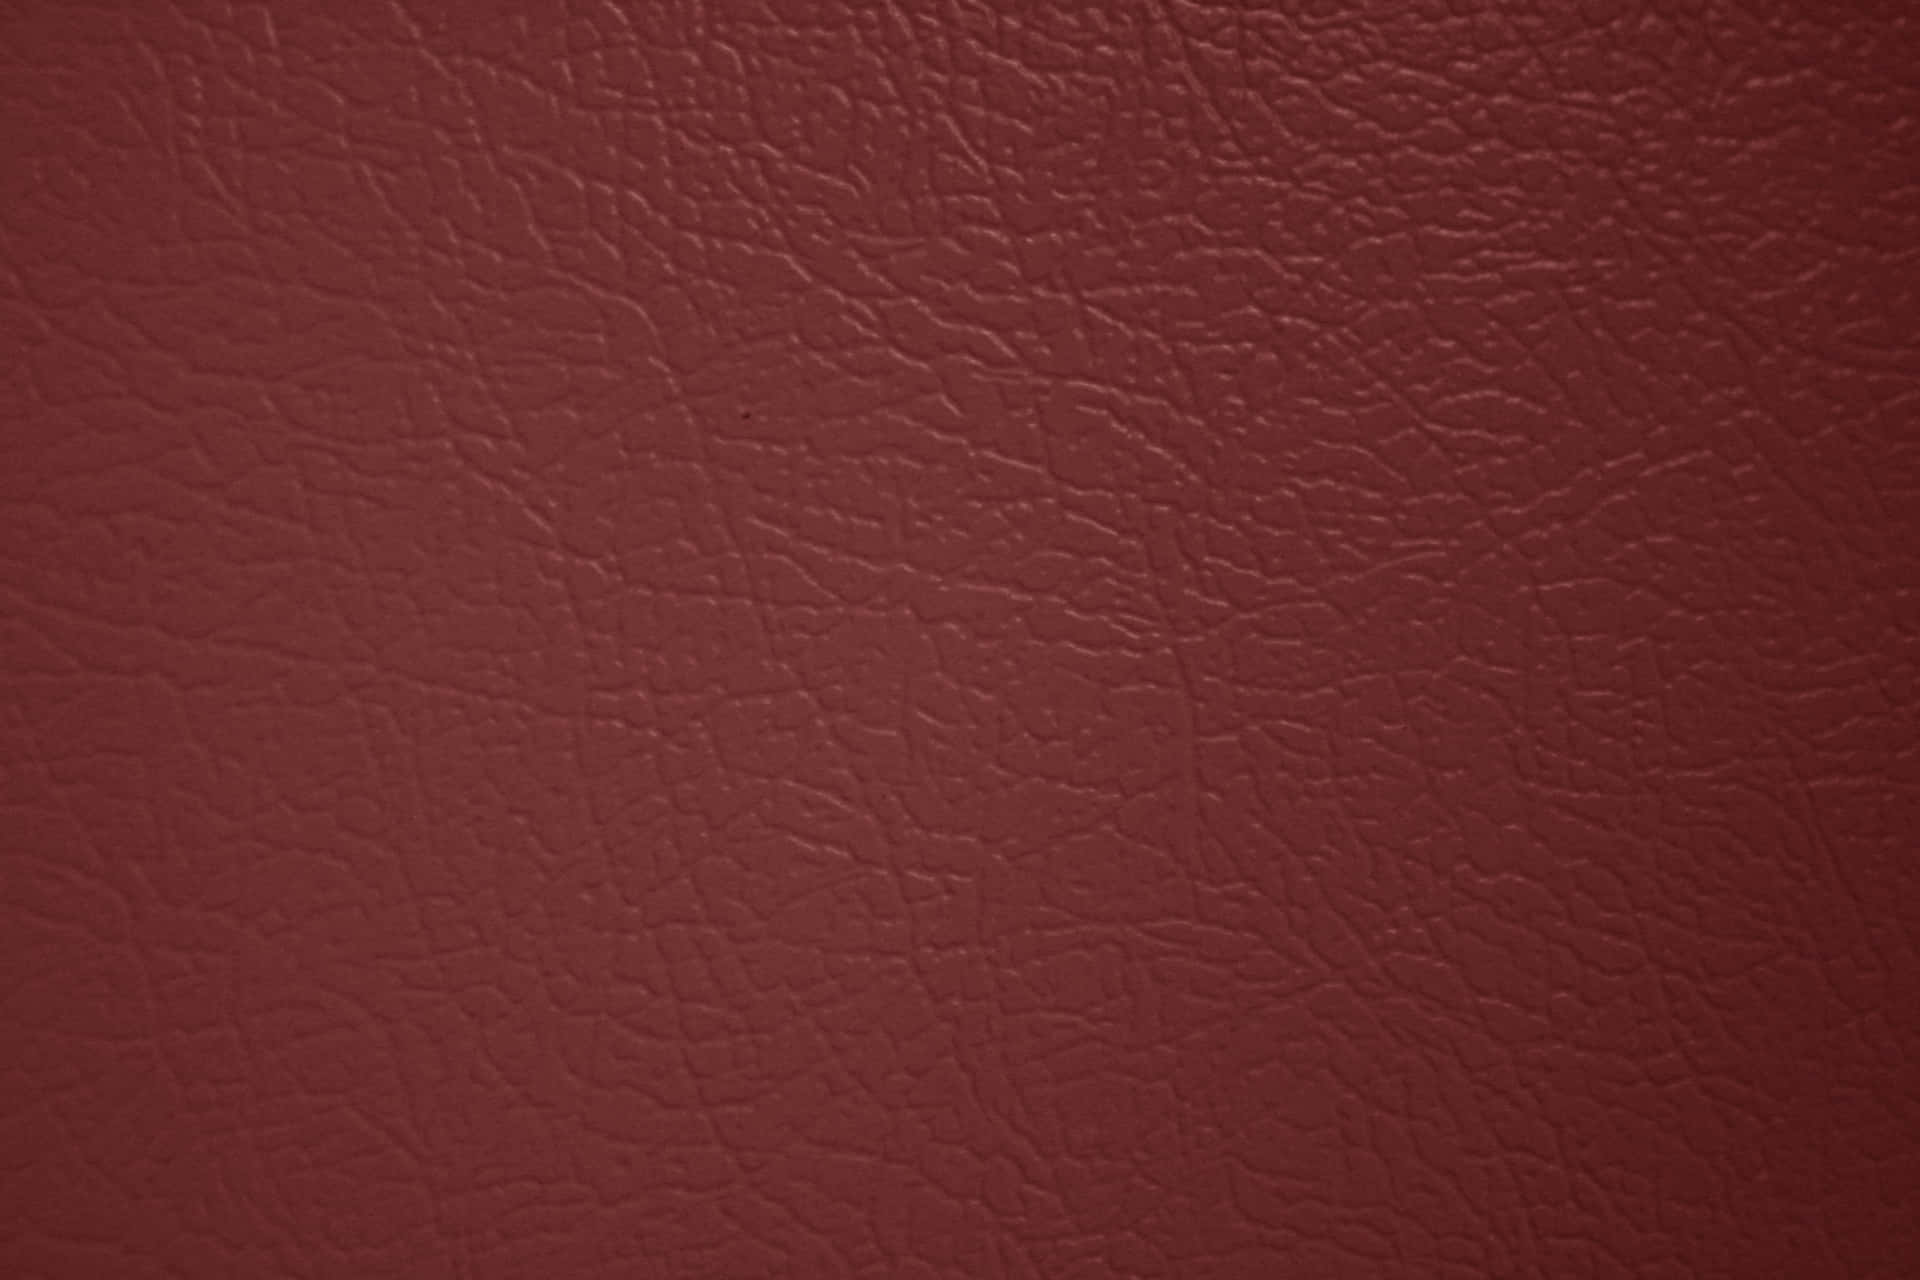 Stylish Maroon Leather Skin Wallpaper